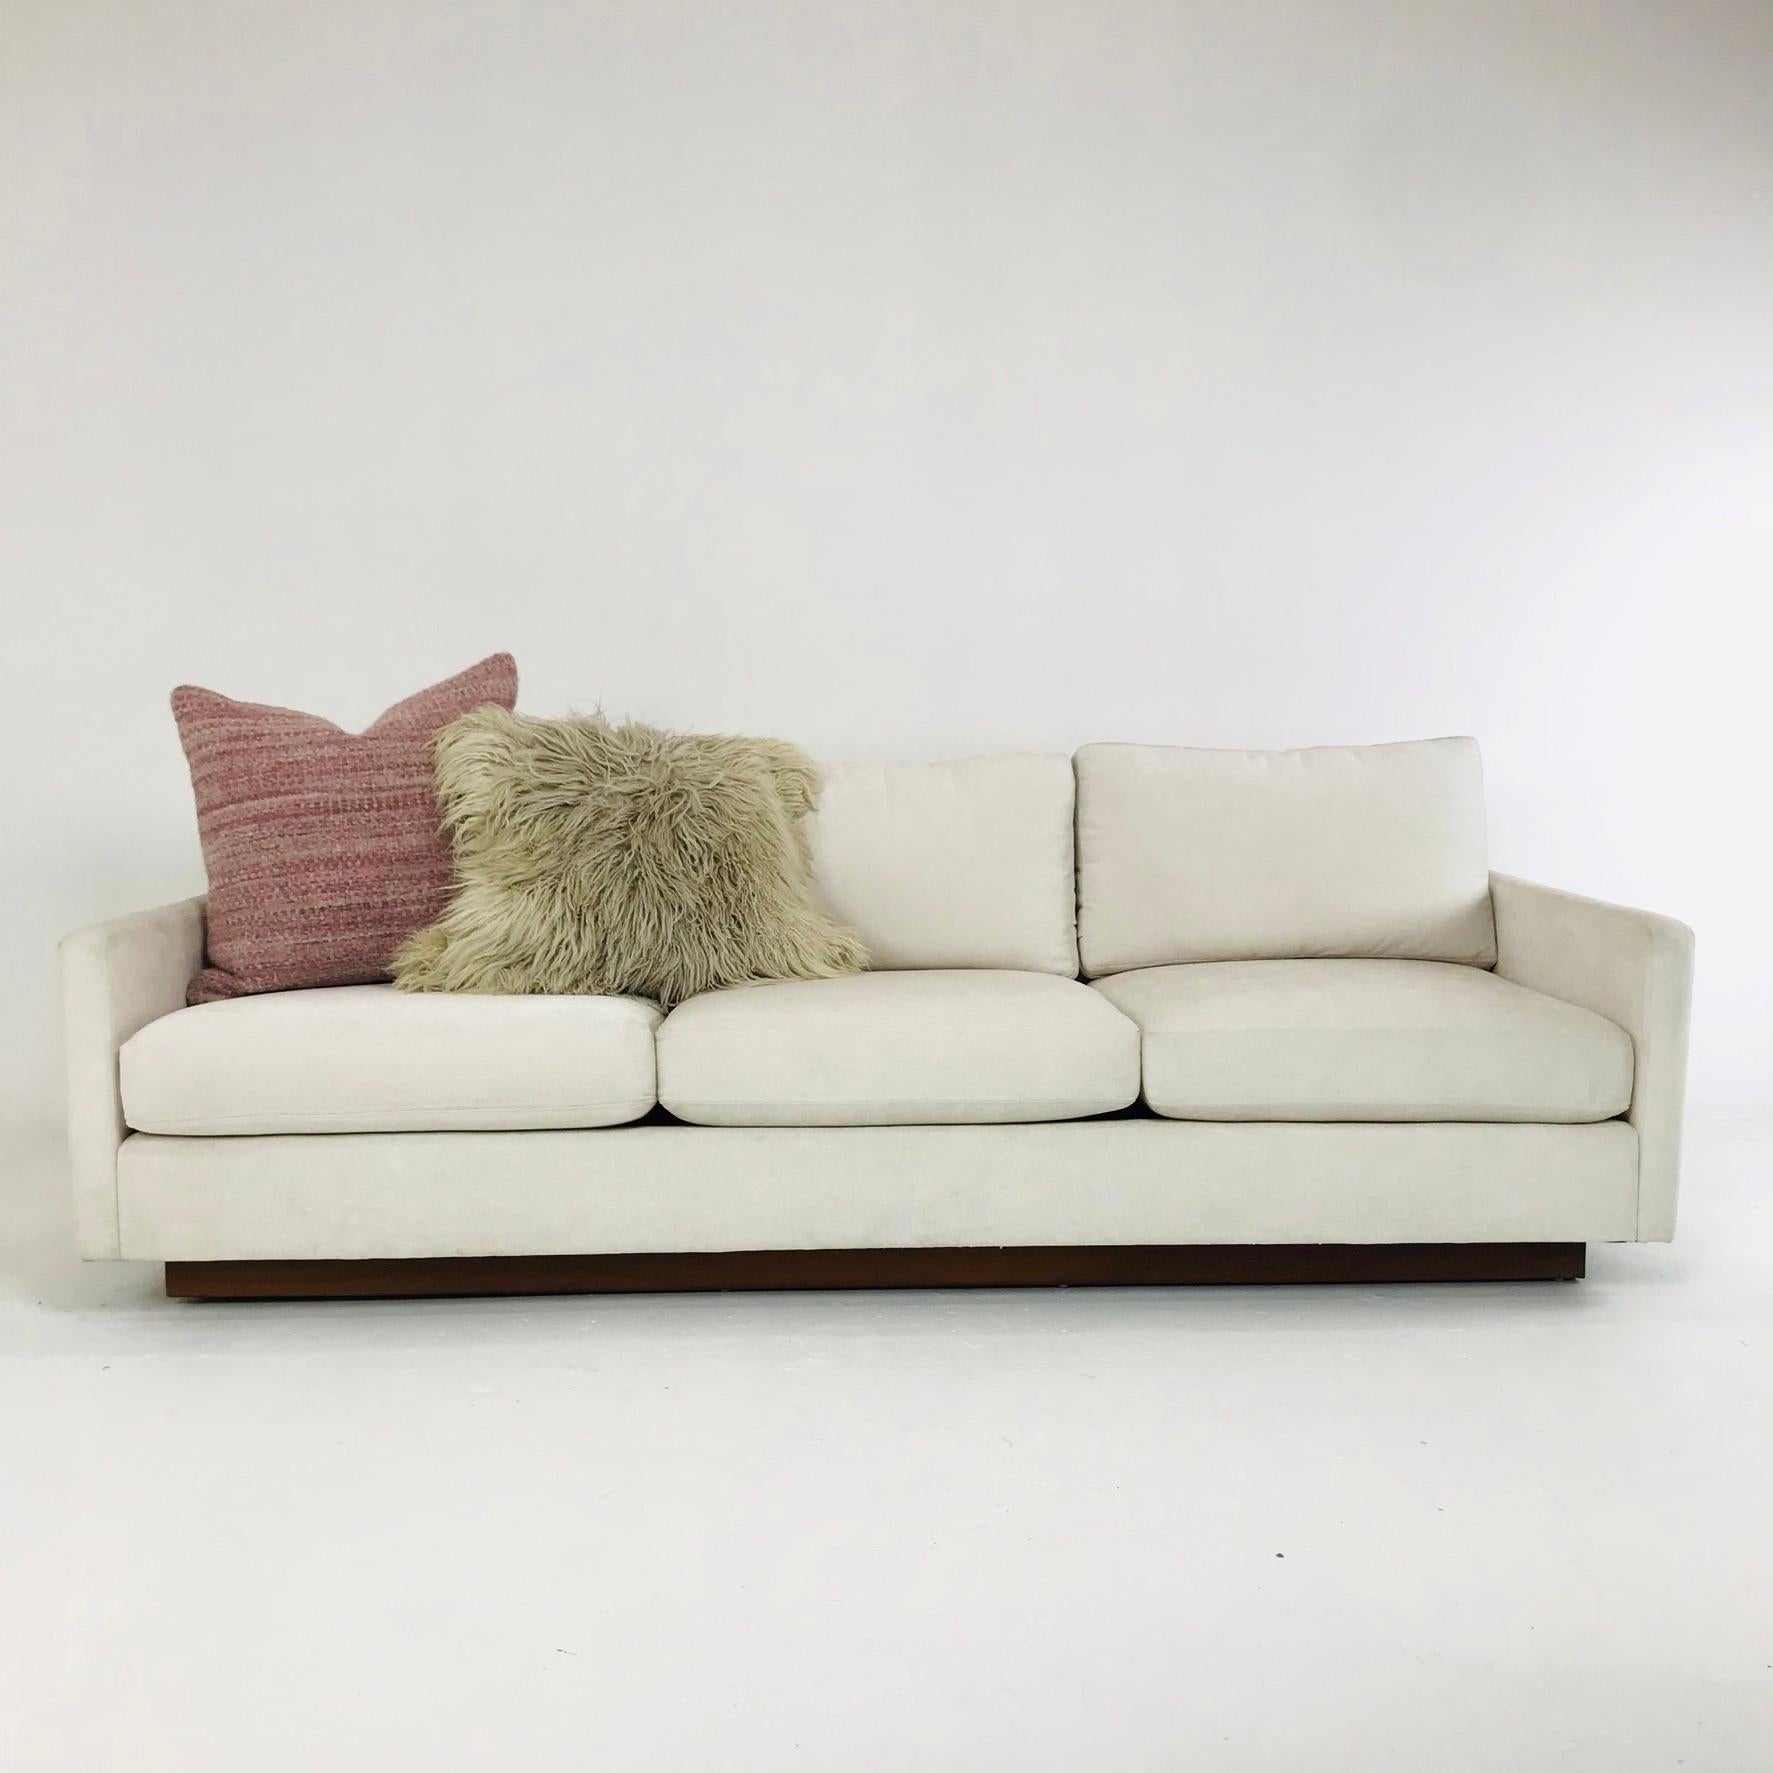 Newly upholstered Milo Baughman 3-seat sofa with walnut plinth base.